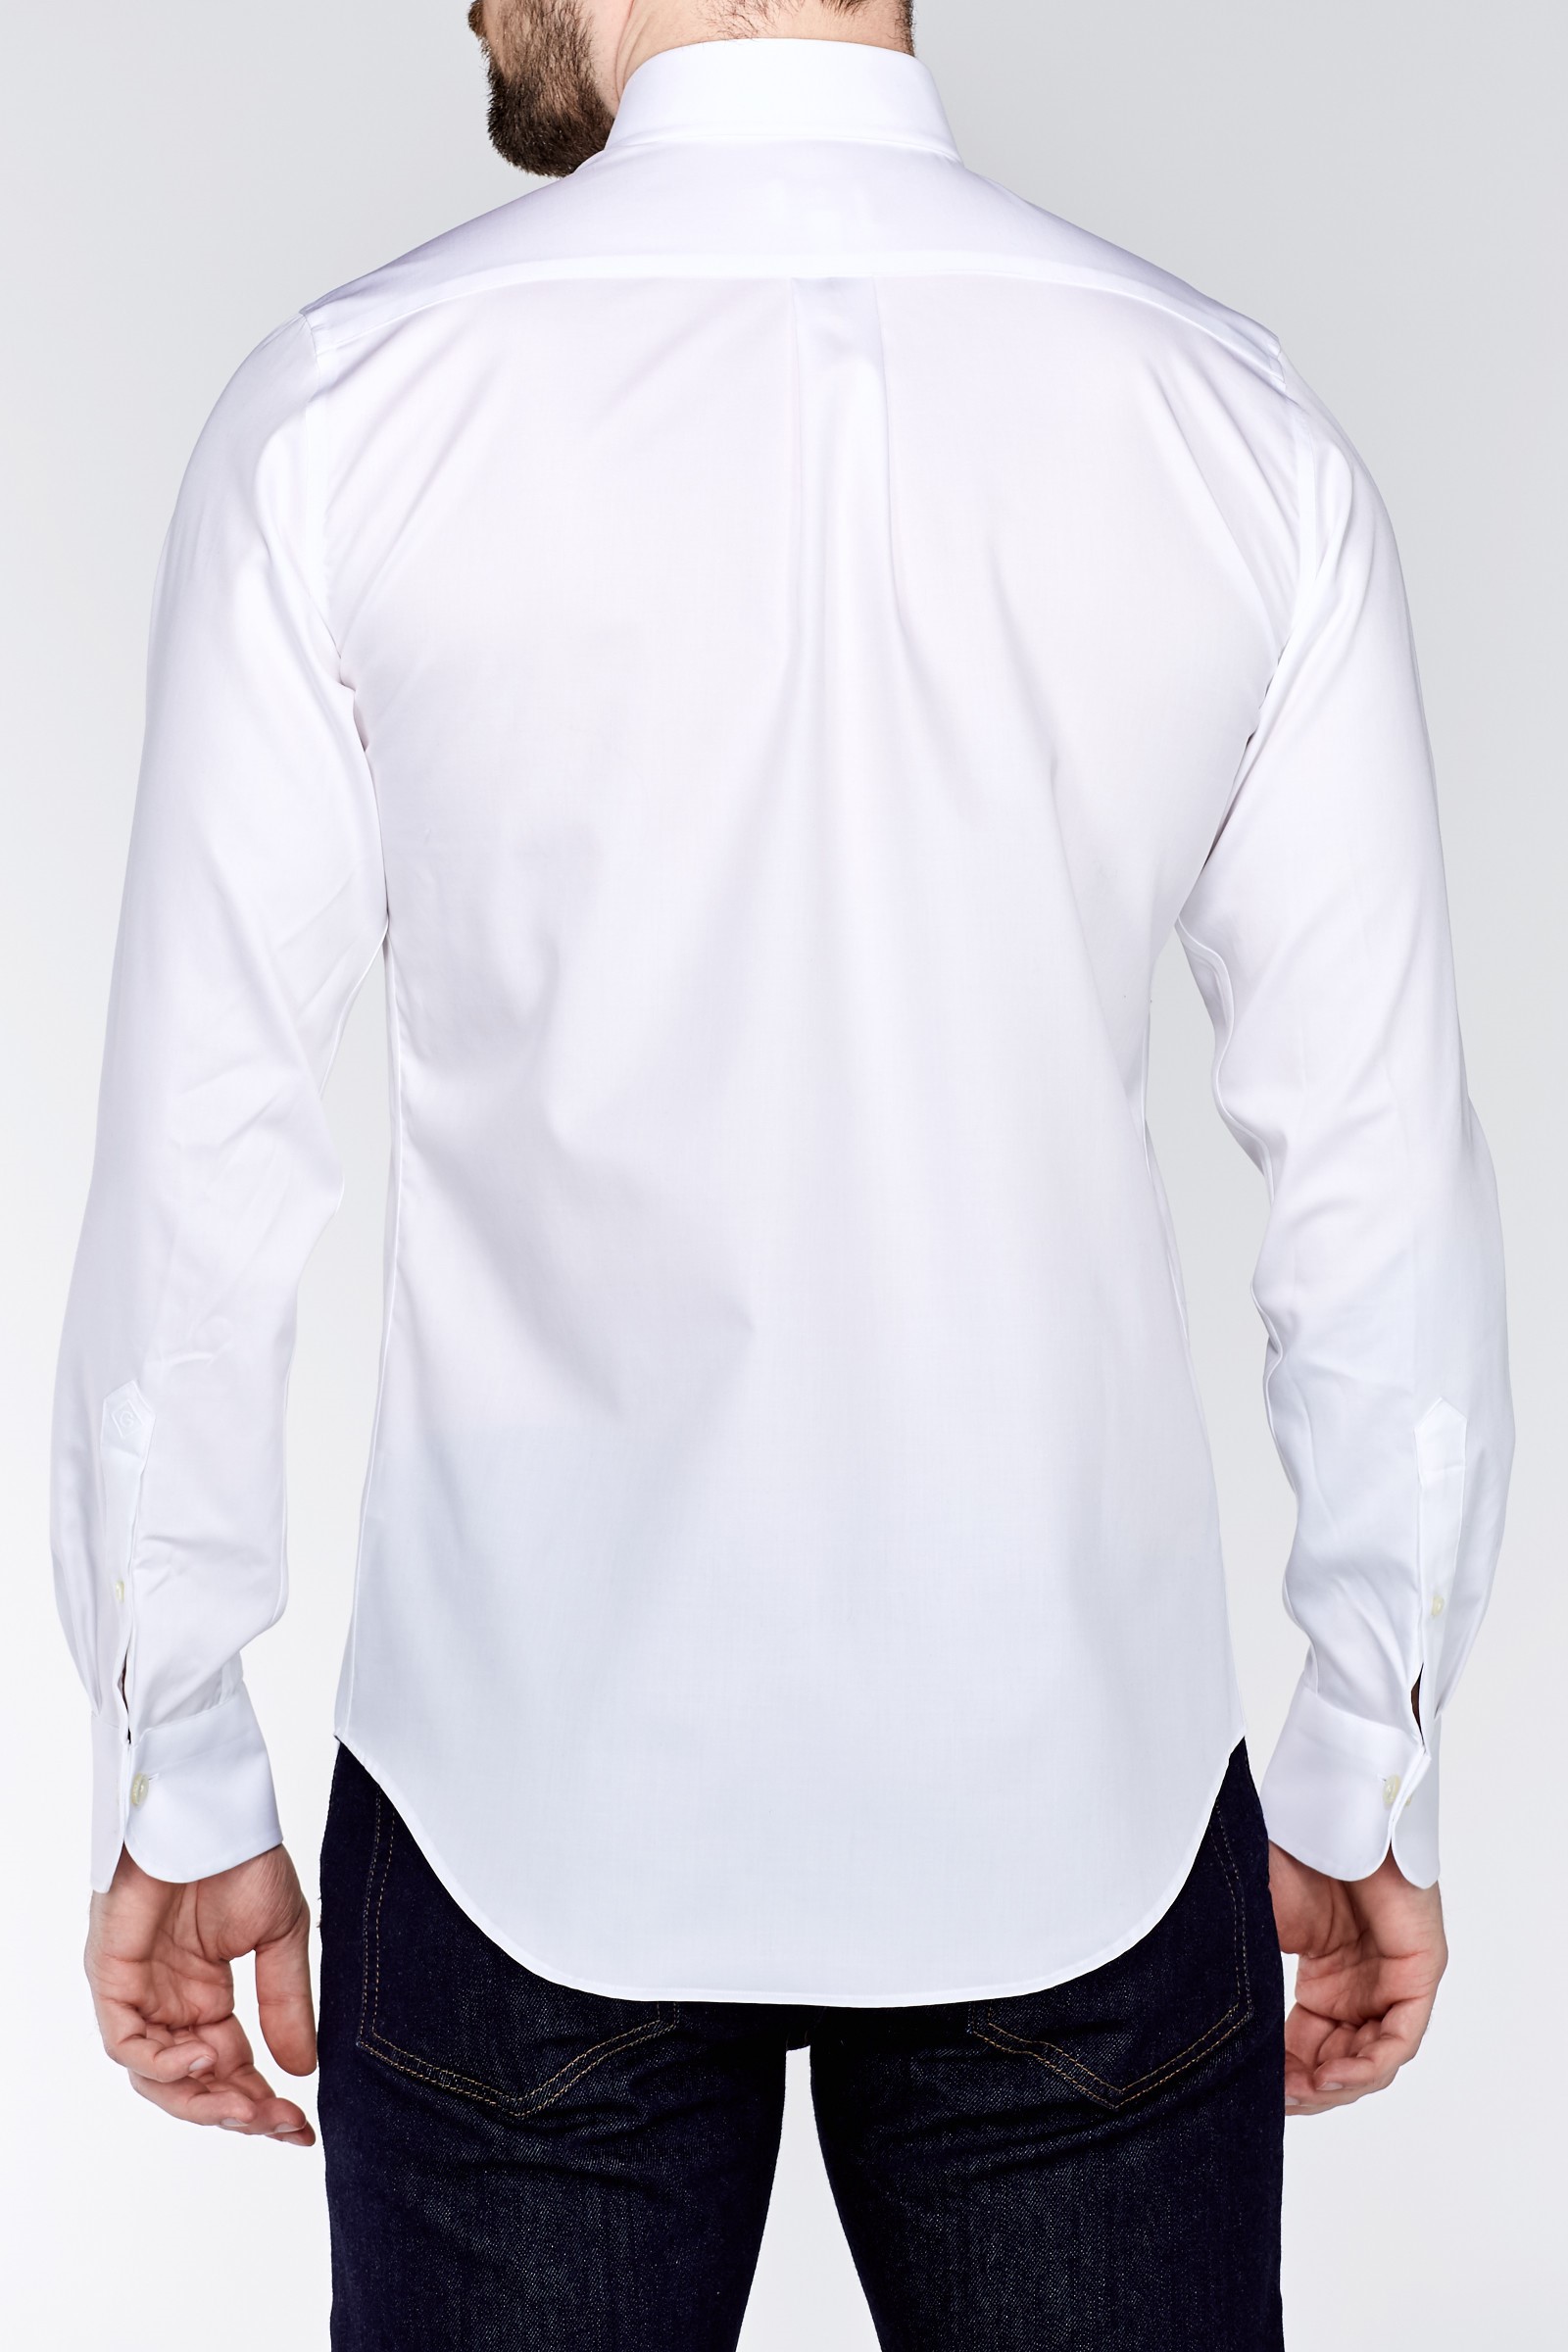 GANT DIAMOND G Men's Plain Sateen Shirt 384102 Size 39 $155 NWT | eBay